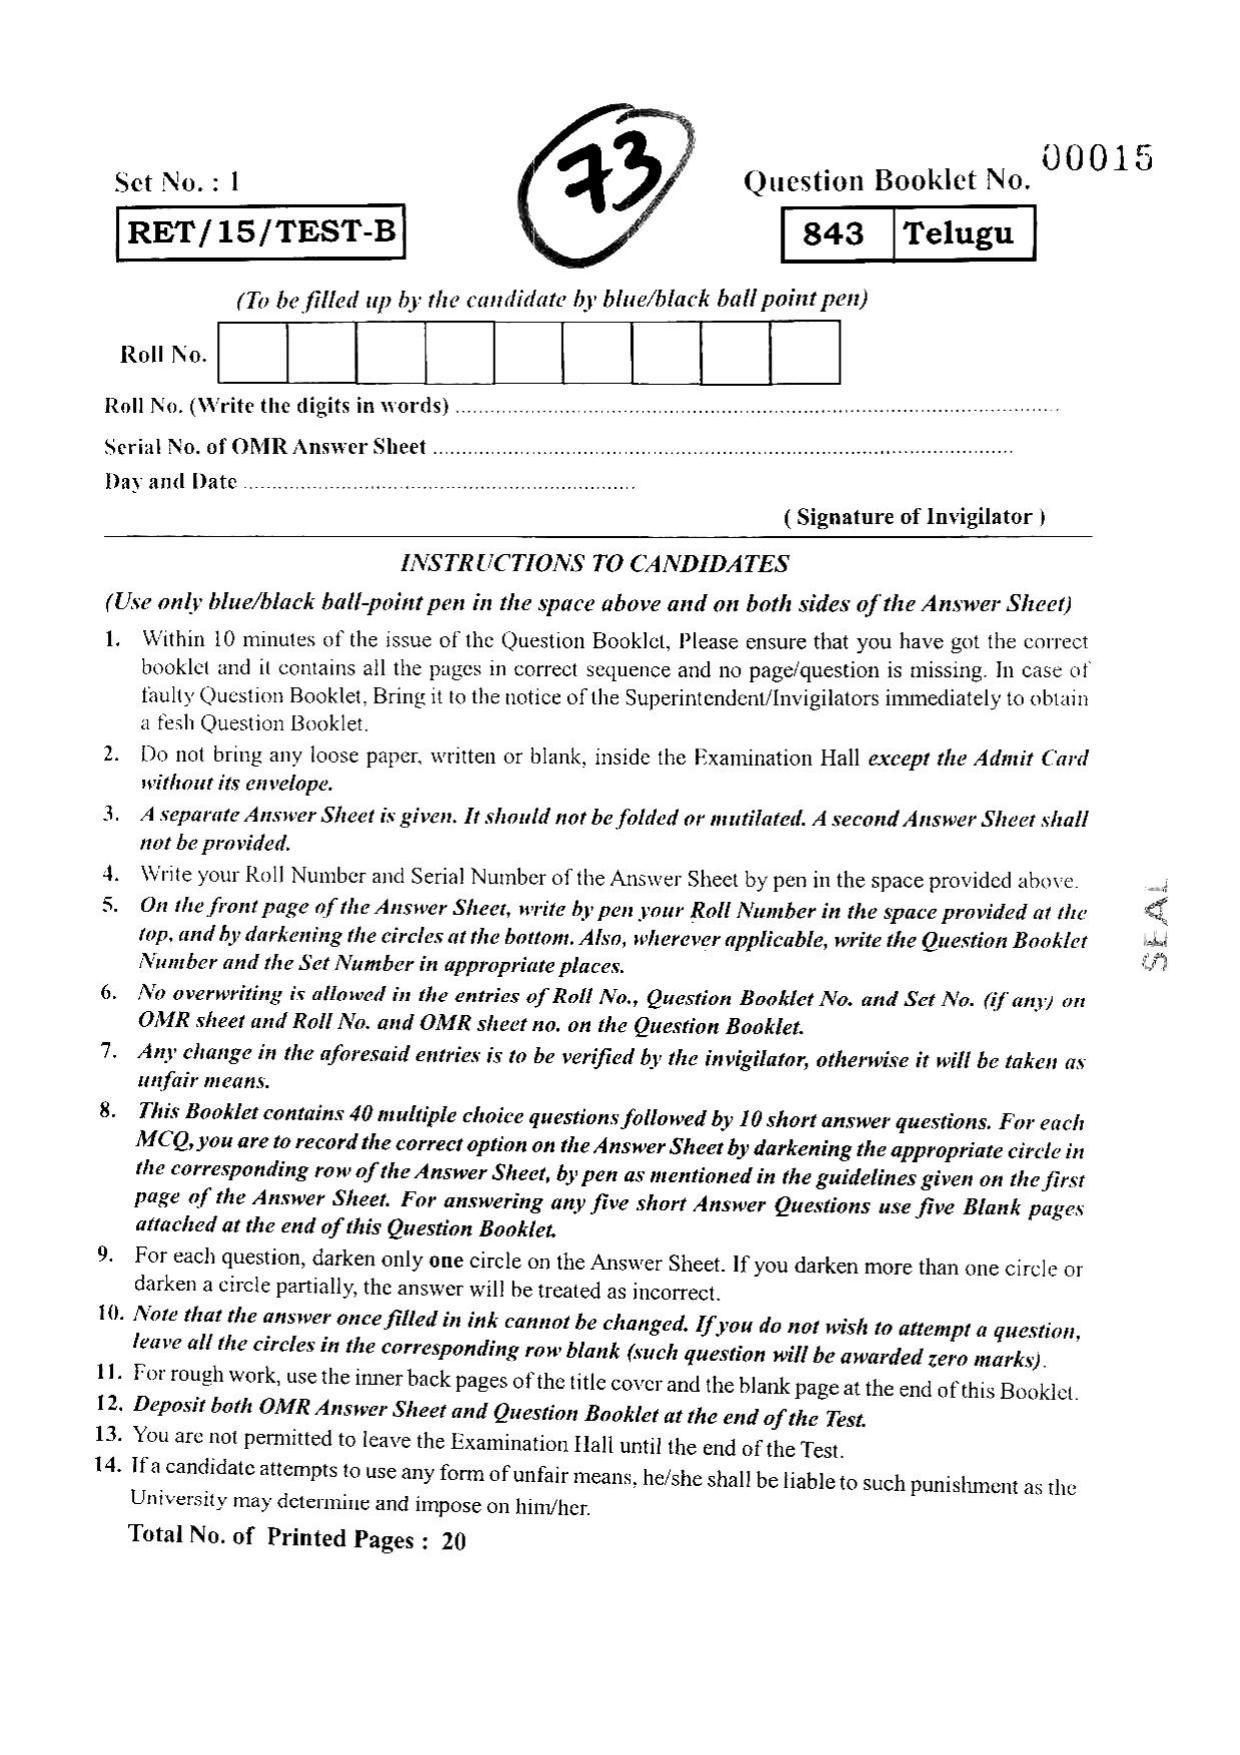 BHU RET TELUGU 2015 Question Paper - Page 1